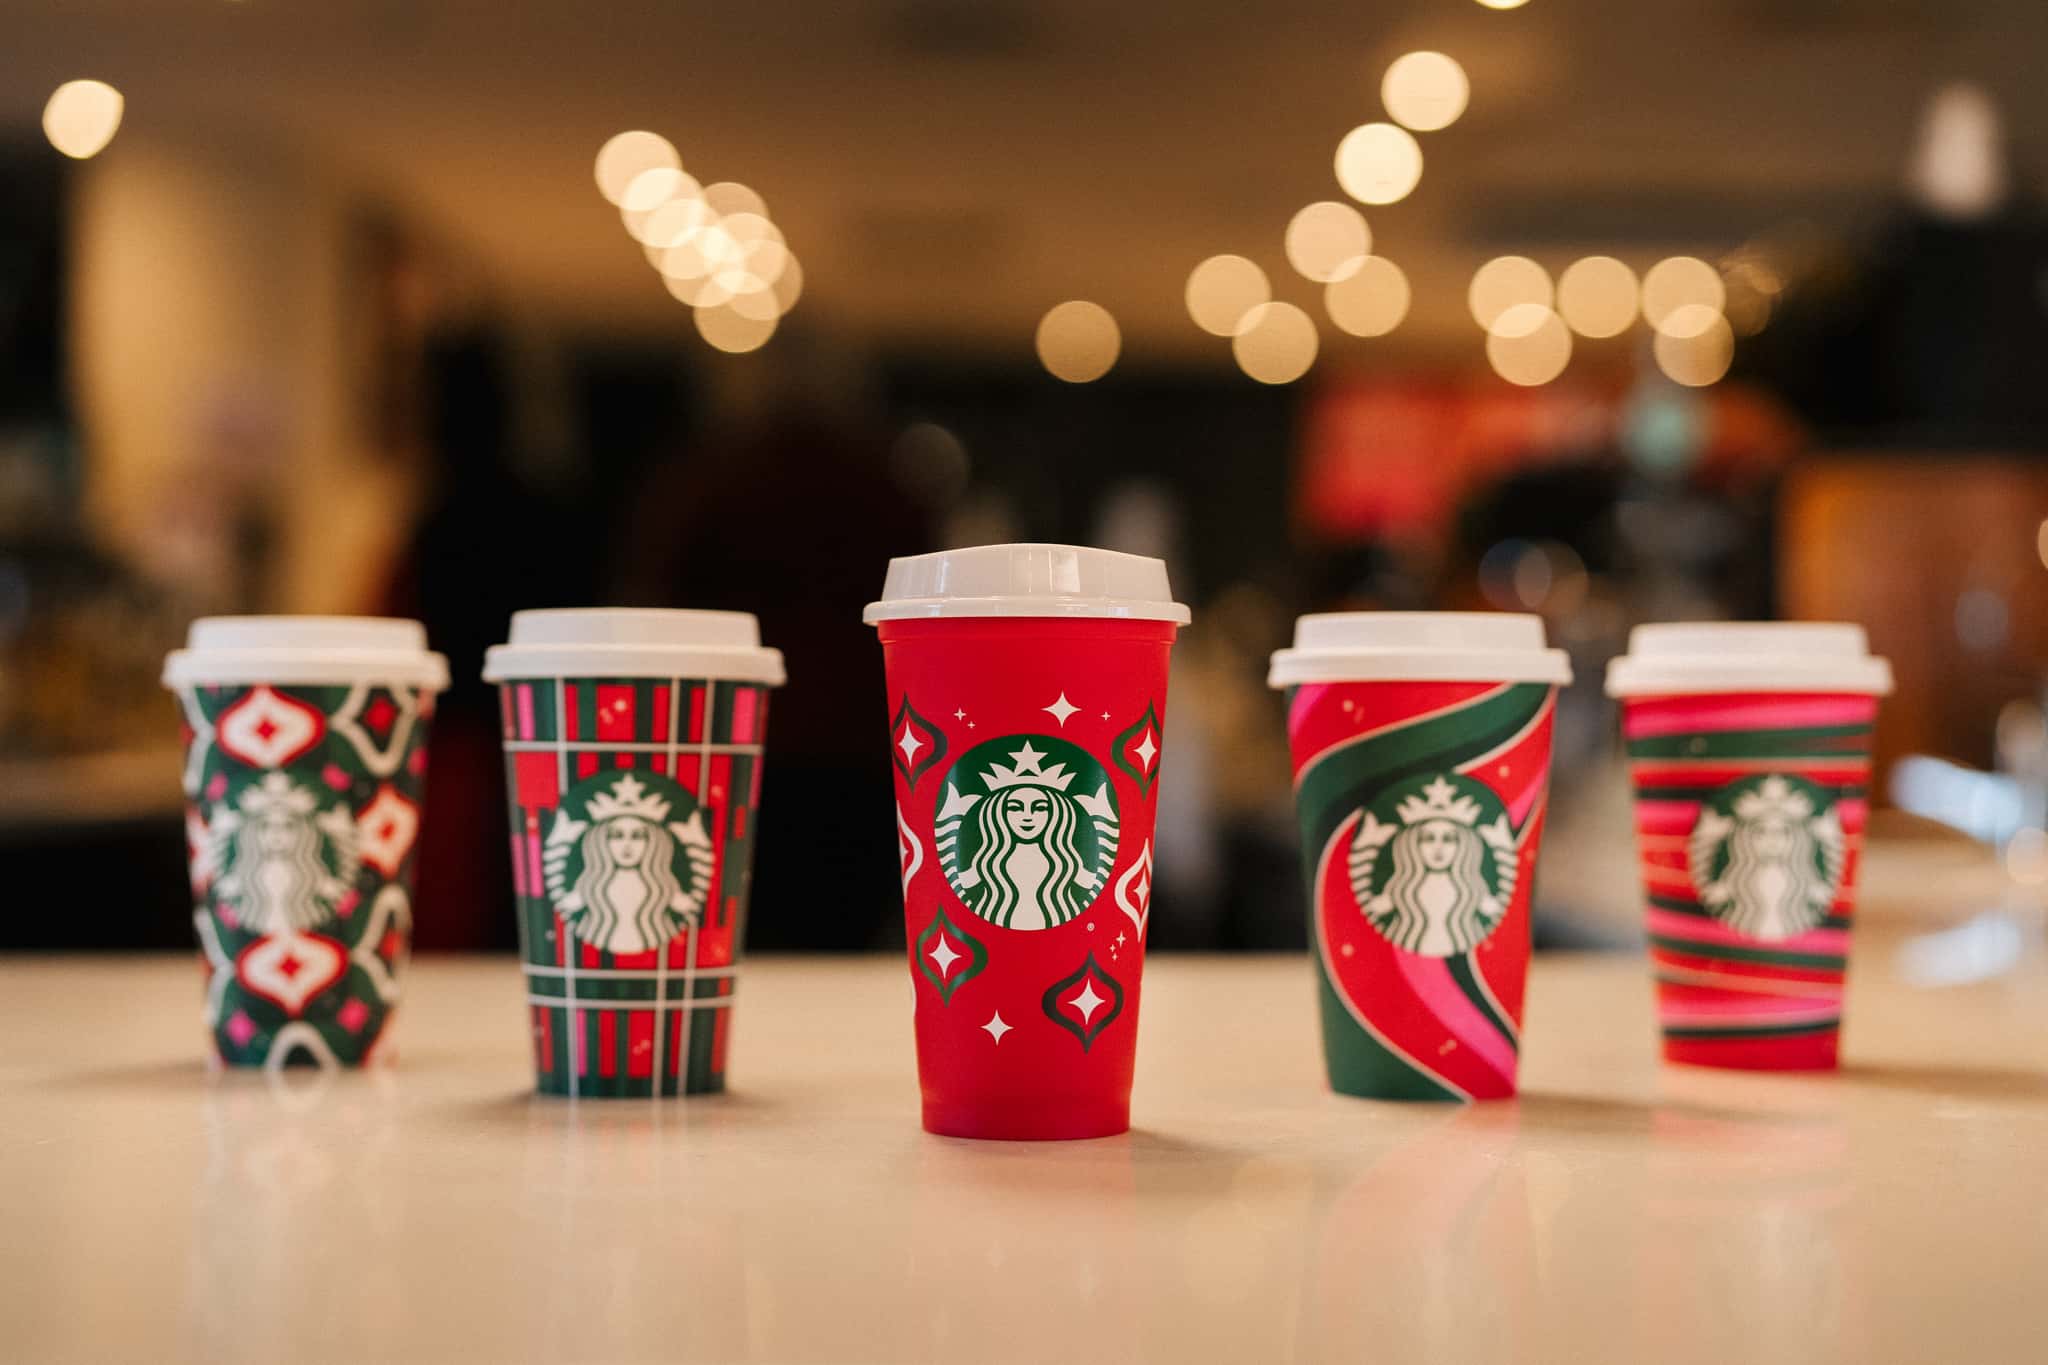 Starbucks Promotions - Mug Gift Set